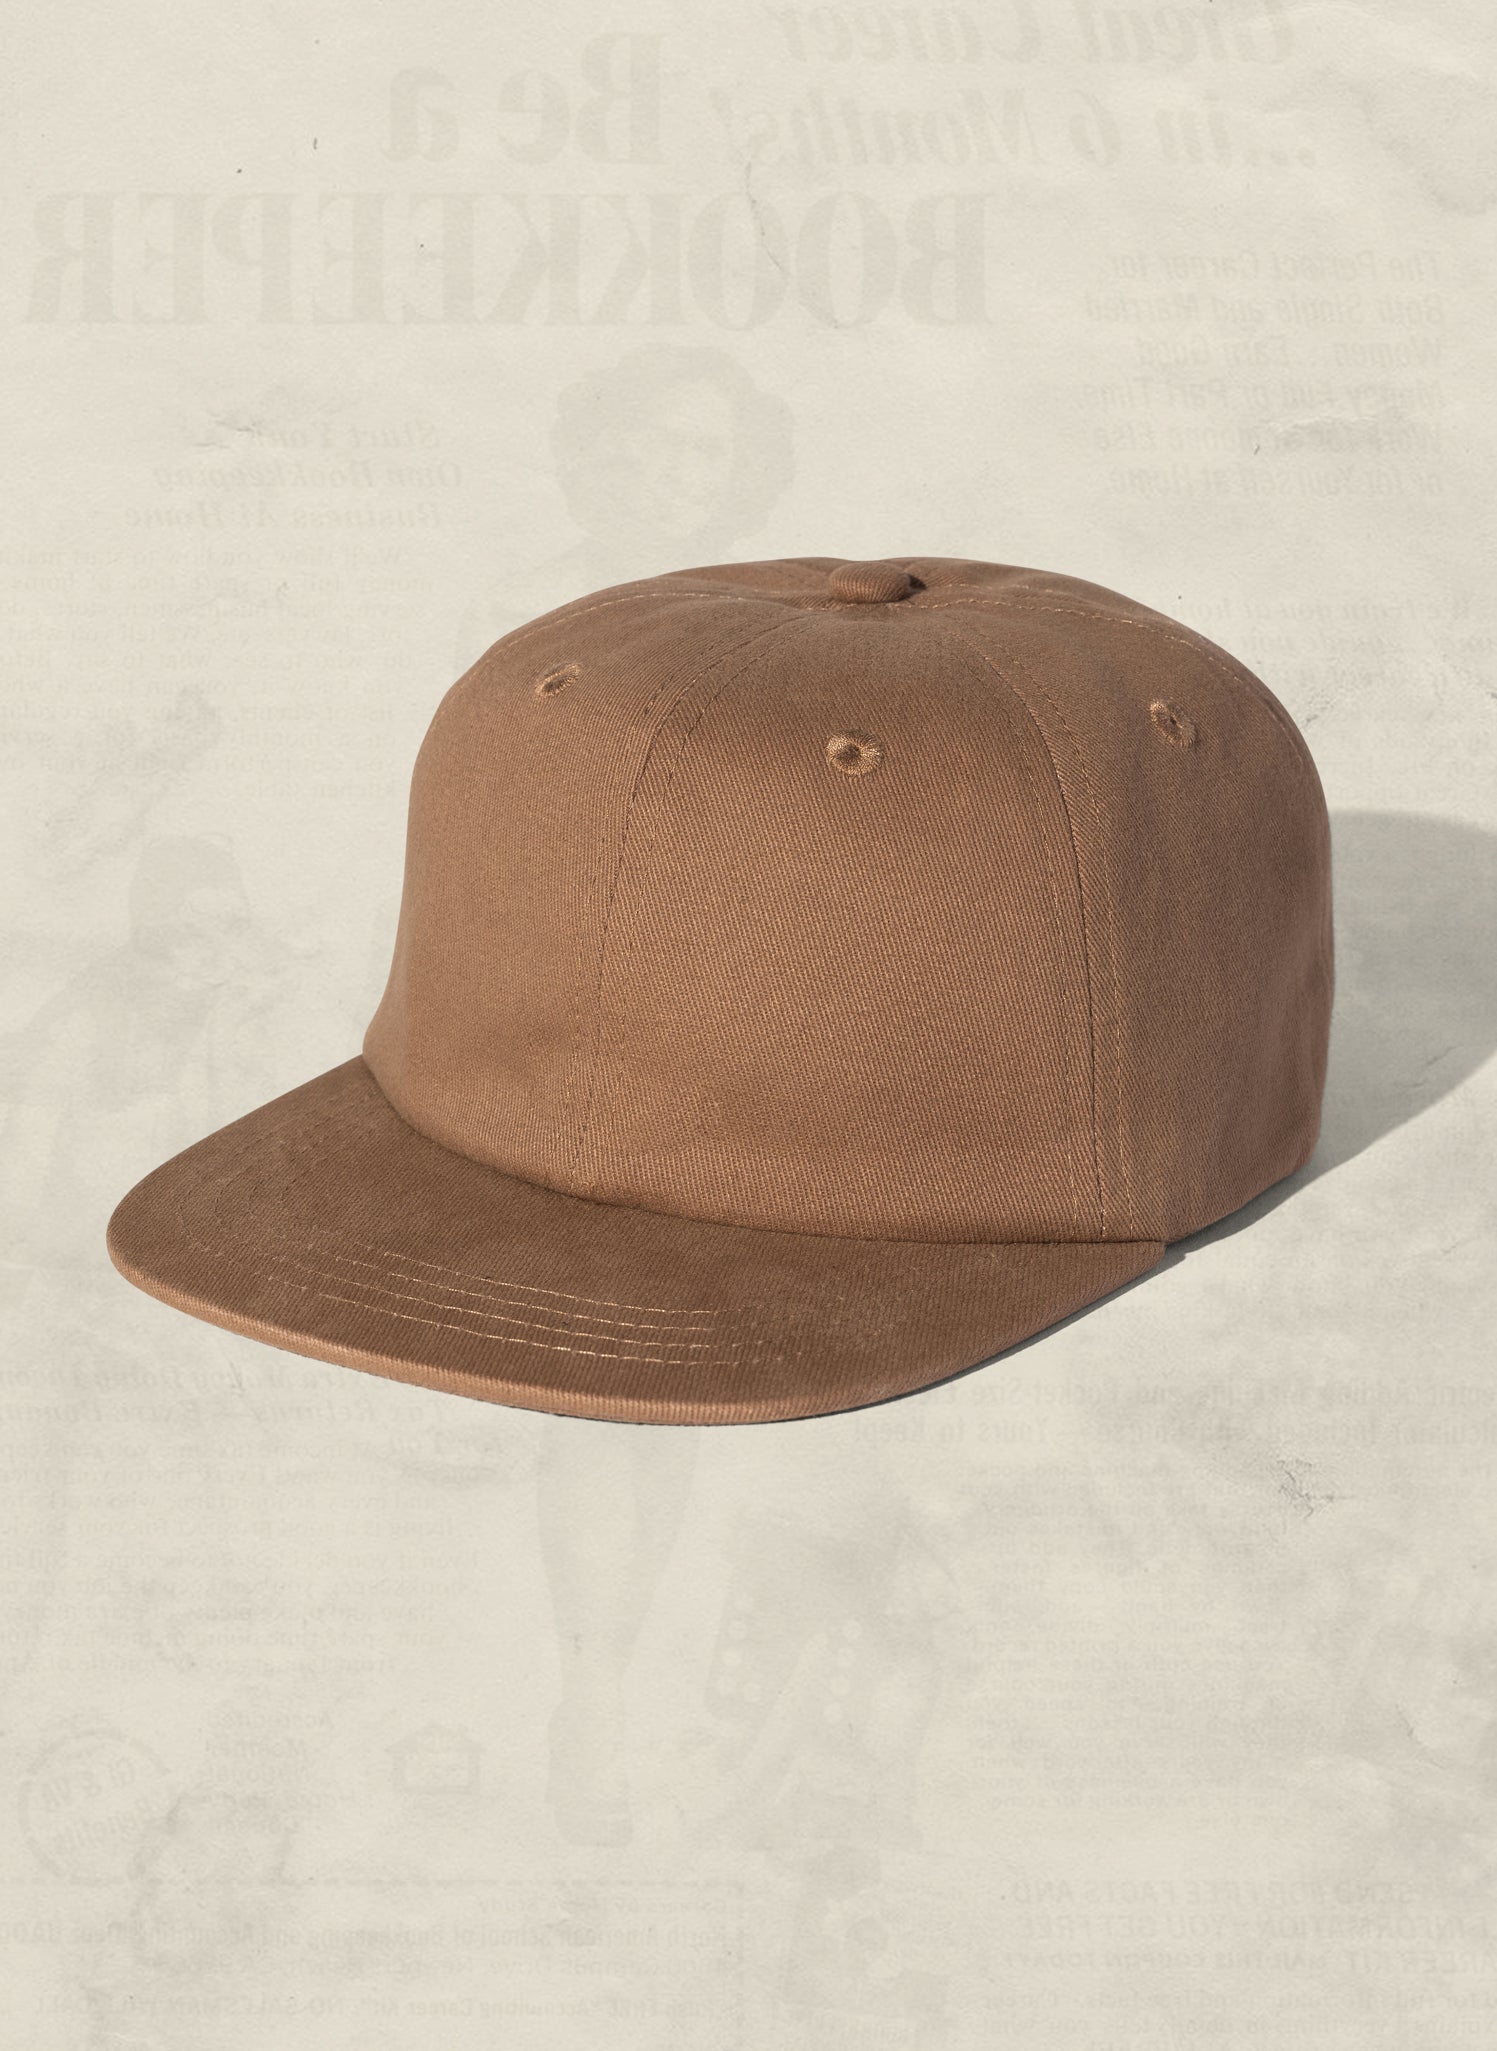 Weld Mfg Brushed Cotton Twill Kids Unstructured 6 Panel Vintage Inspired Baseball Strapback Hat - Laid Back Childrens Headwear - Light Brown